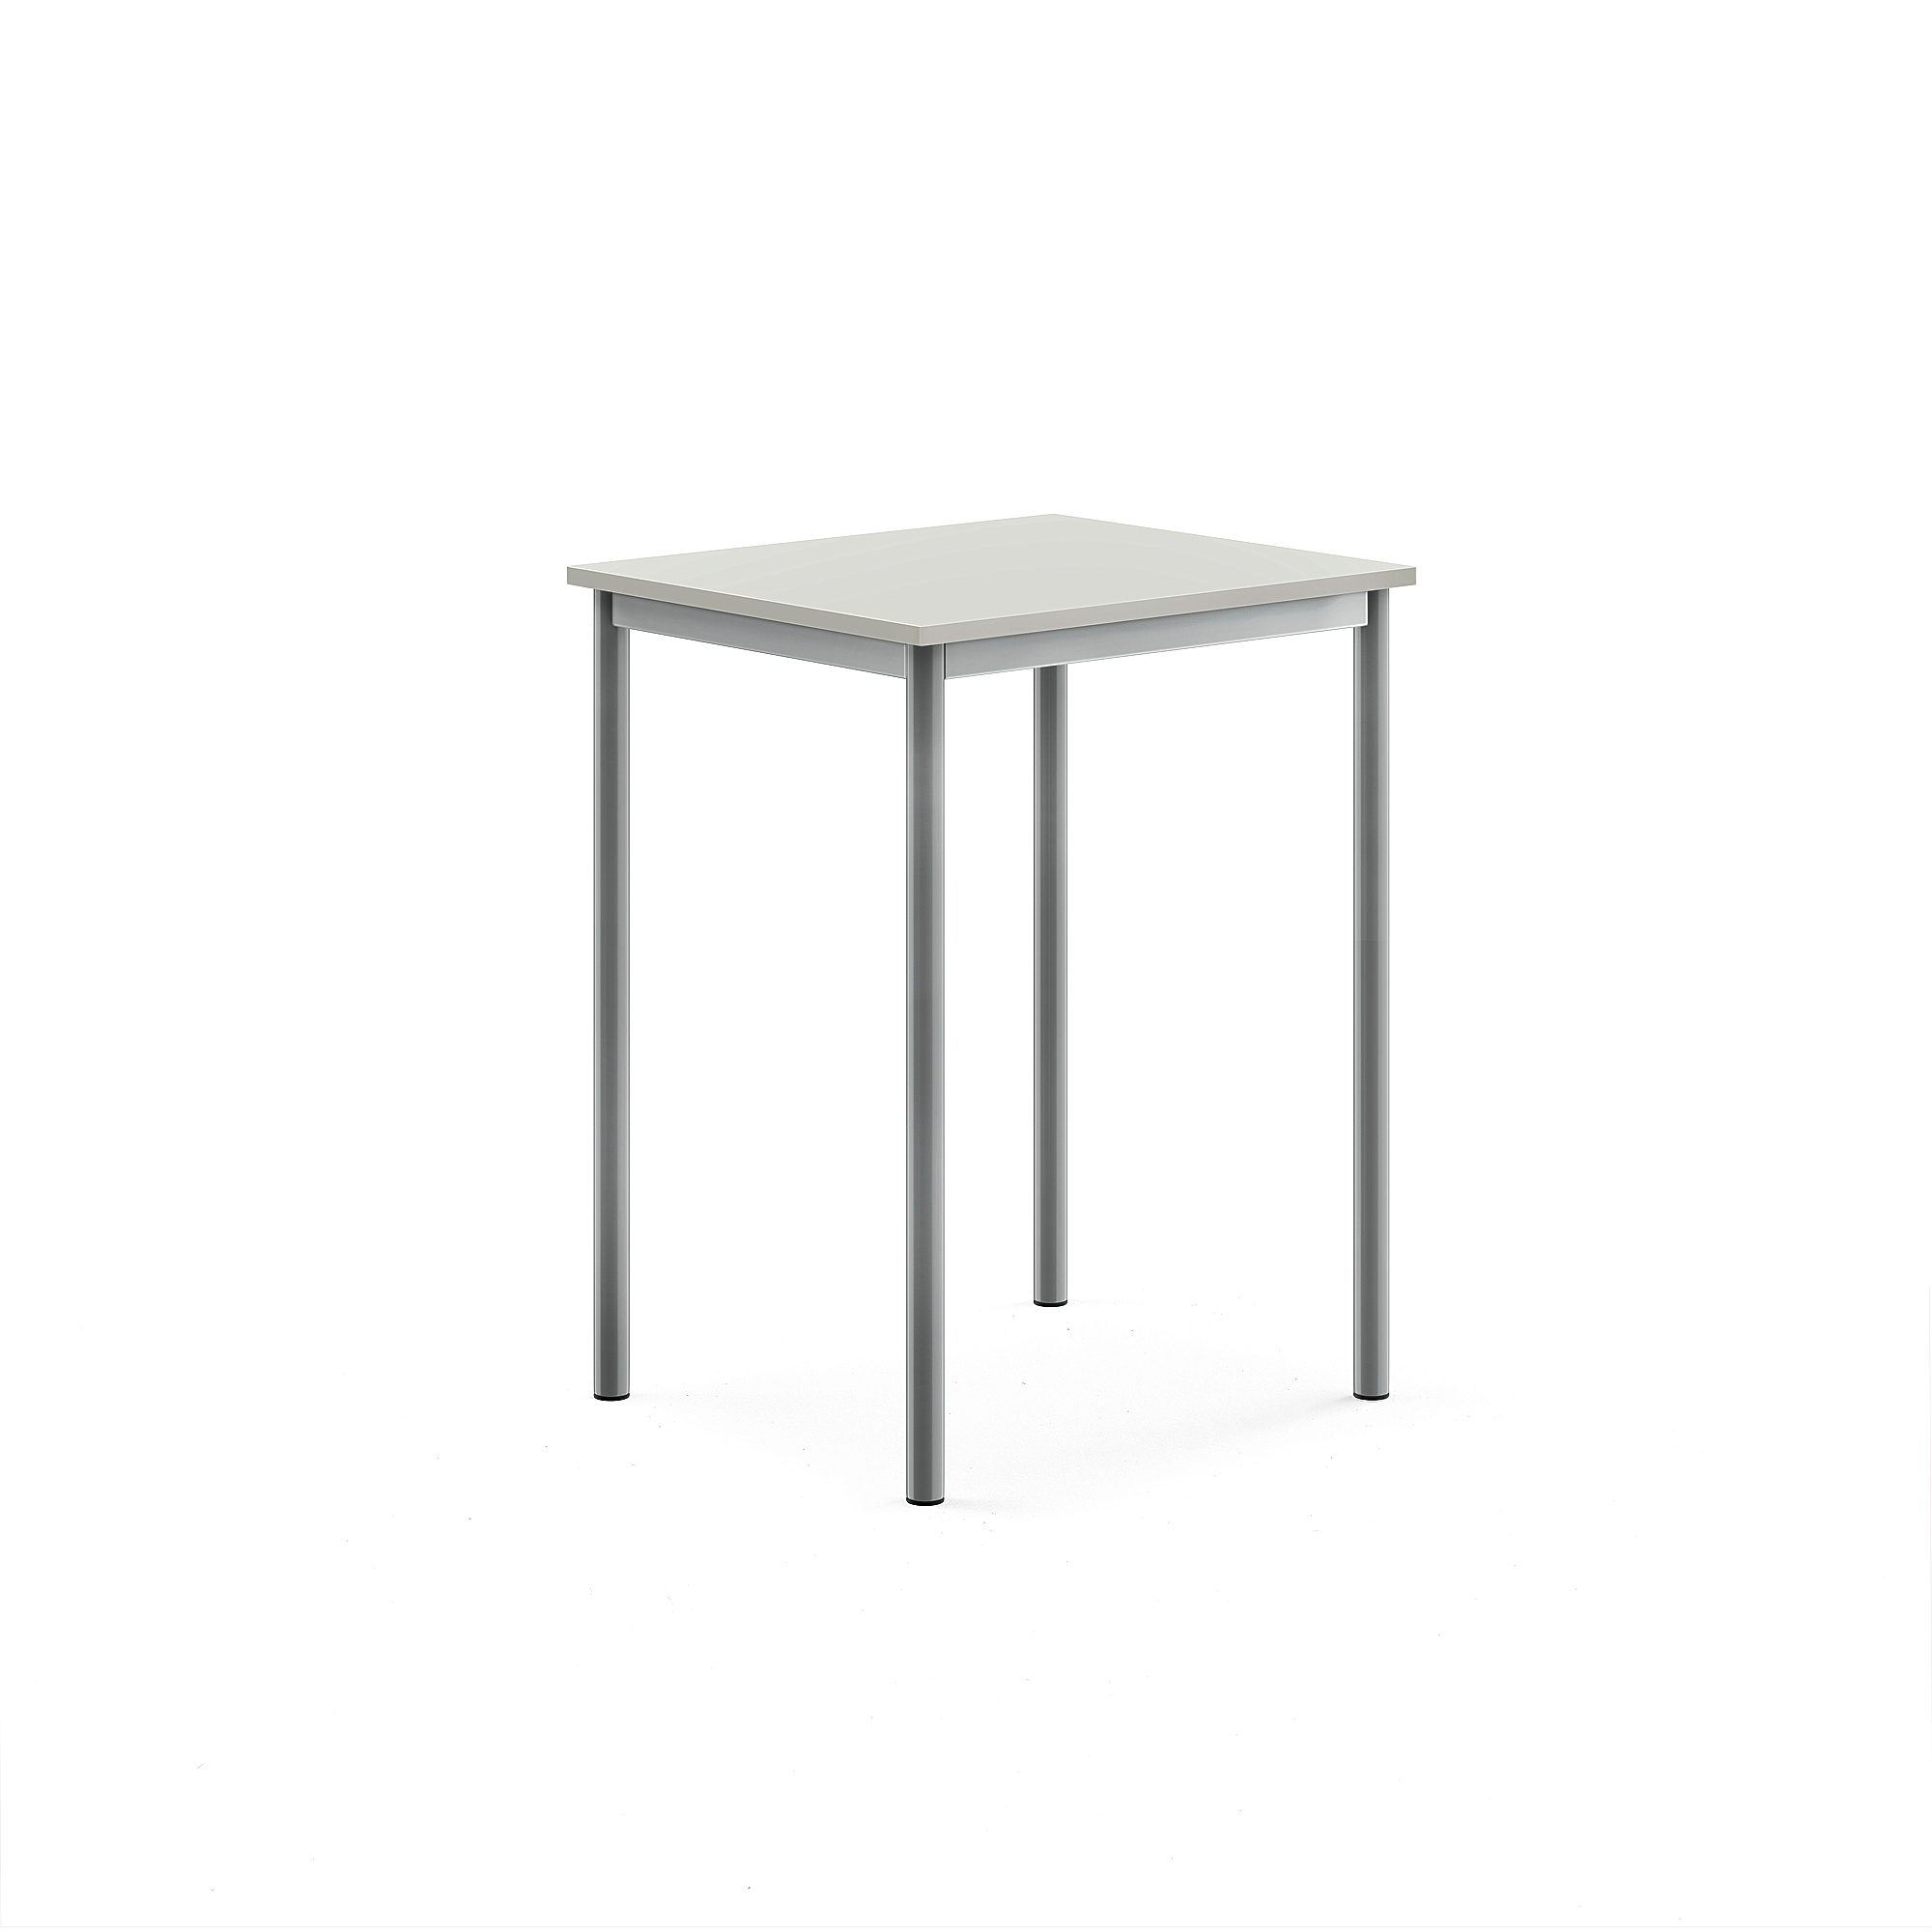 Stůl SONITUS, 700x600x900 mm, stříbrné nohy, HPL deska tlumící hluk, šedá